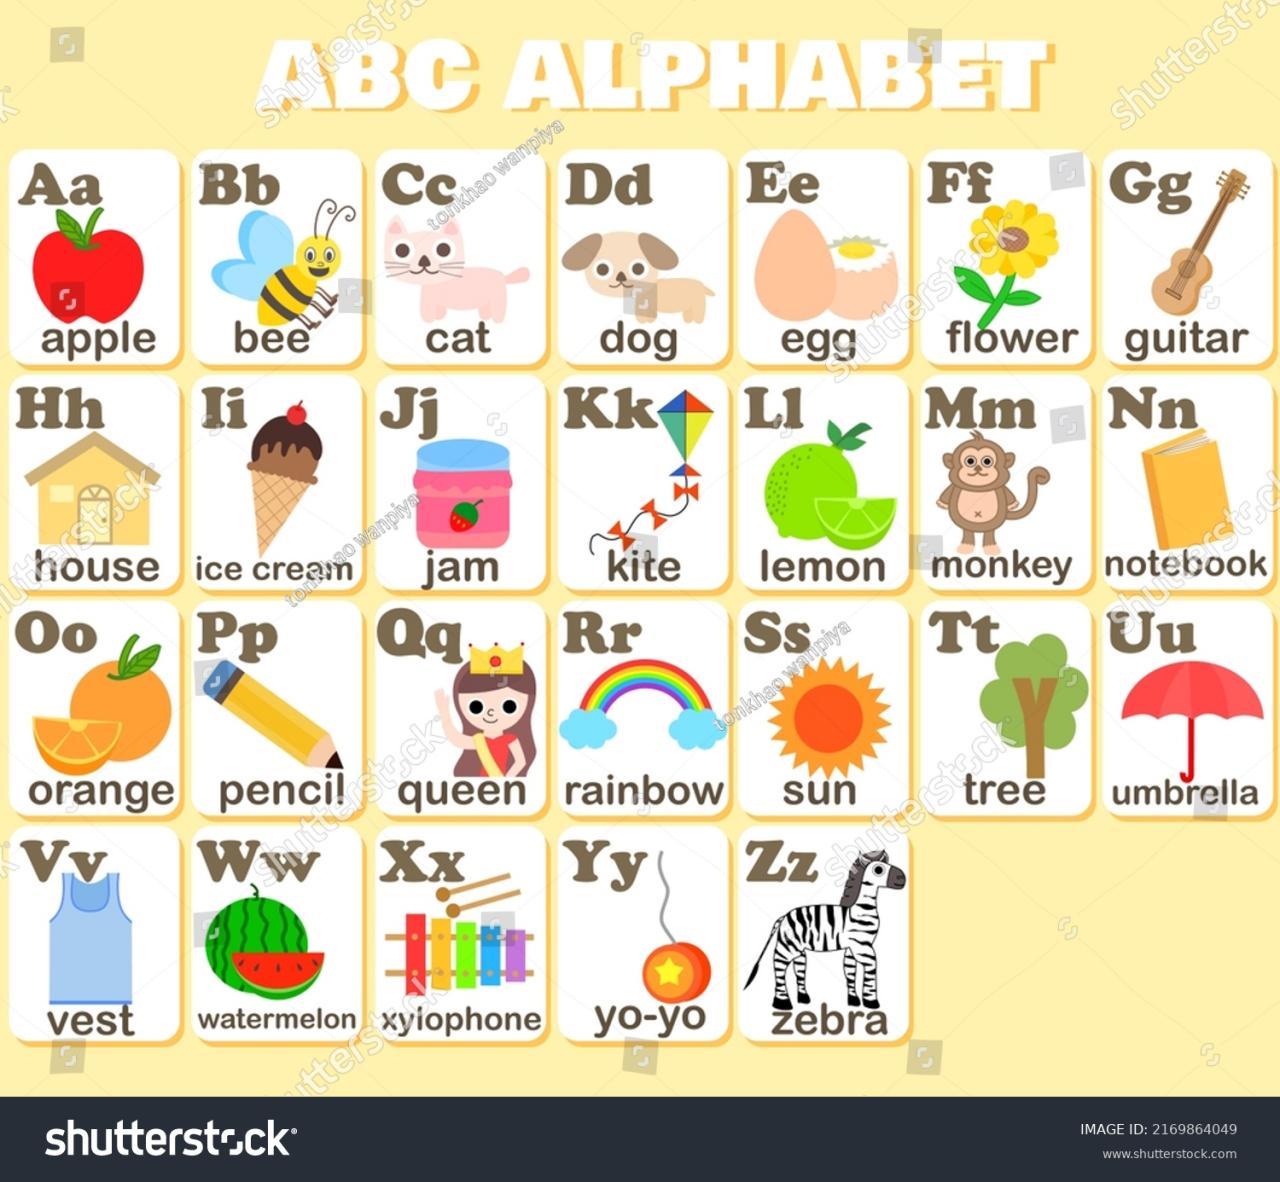 3,715 Flashcard Alphabet Z Words Images, Stock Photos & Vectors |  Shutterstock